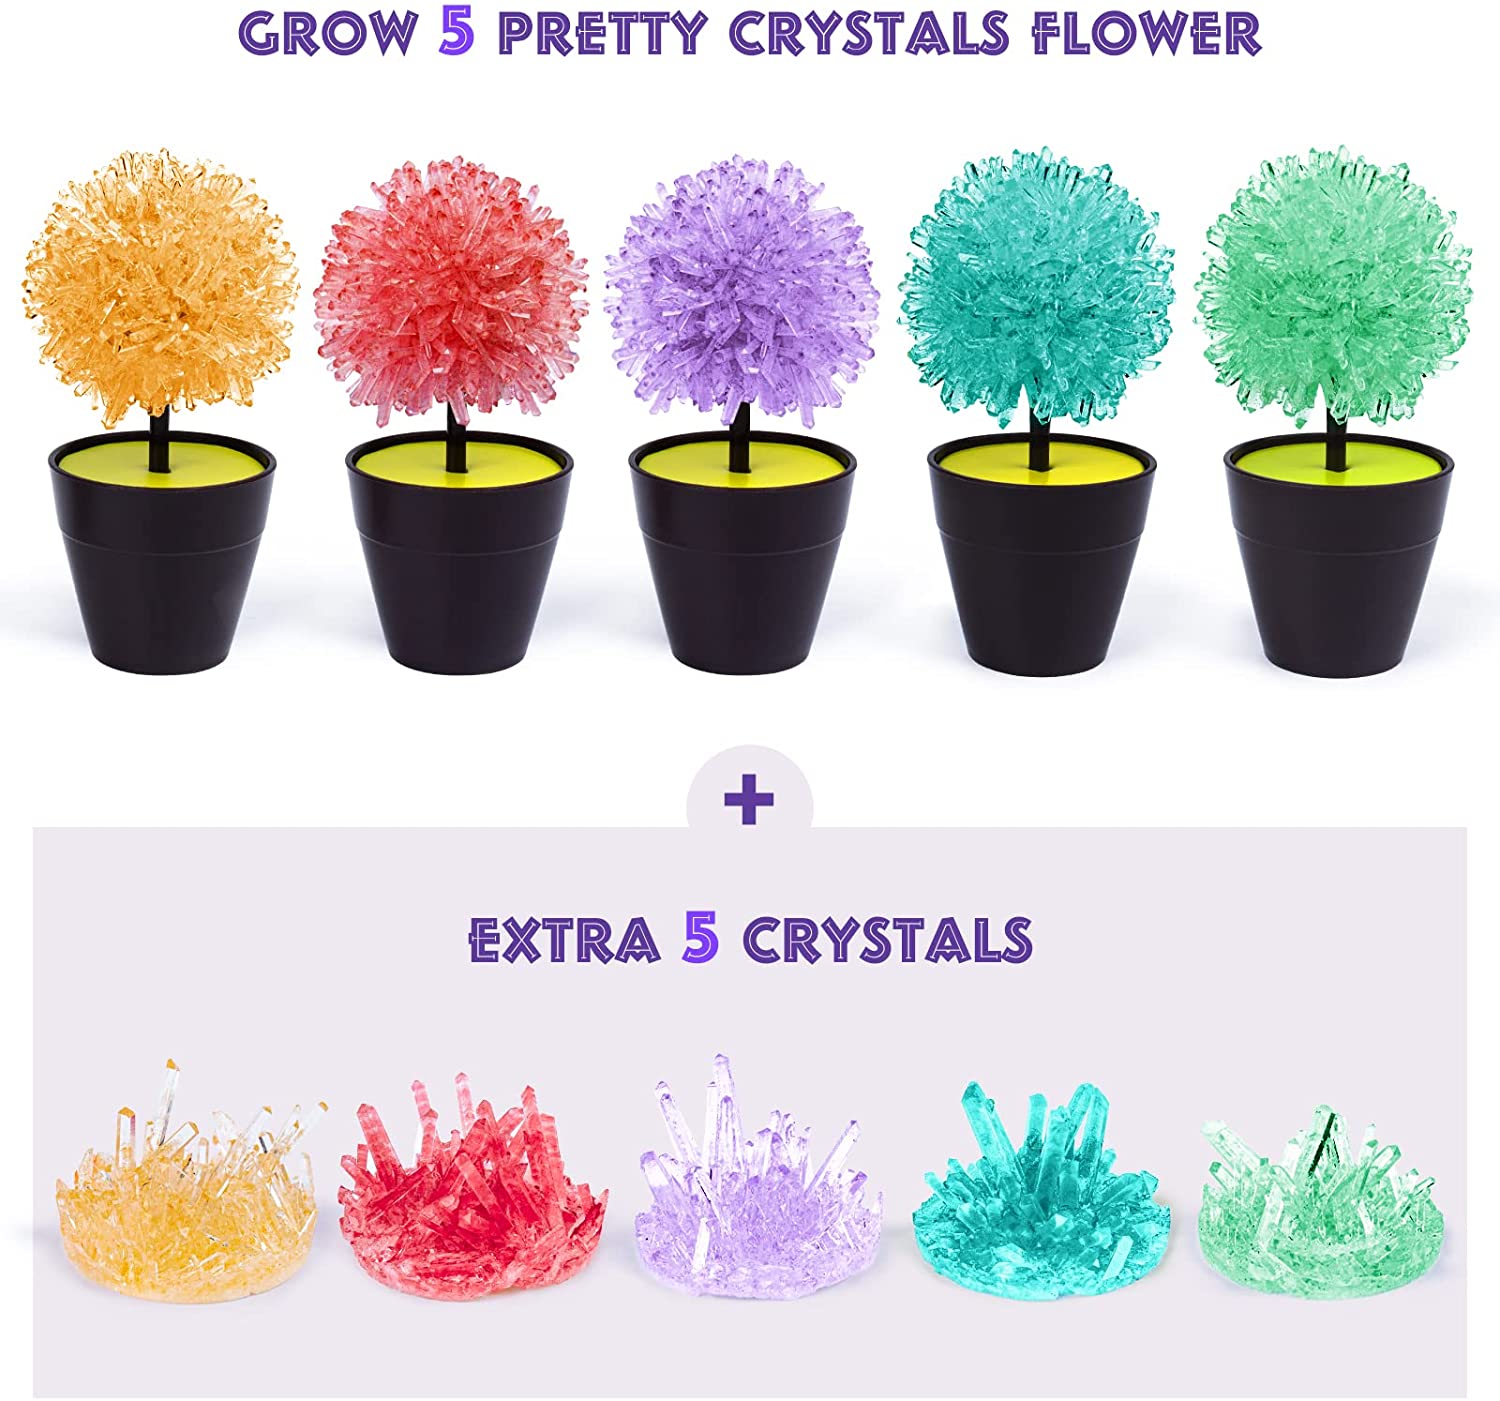 Magic Tree Crystal Growing Kit